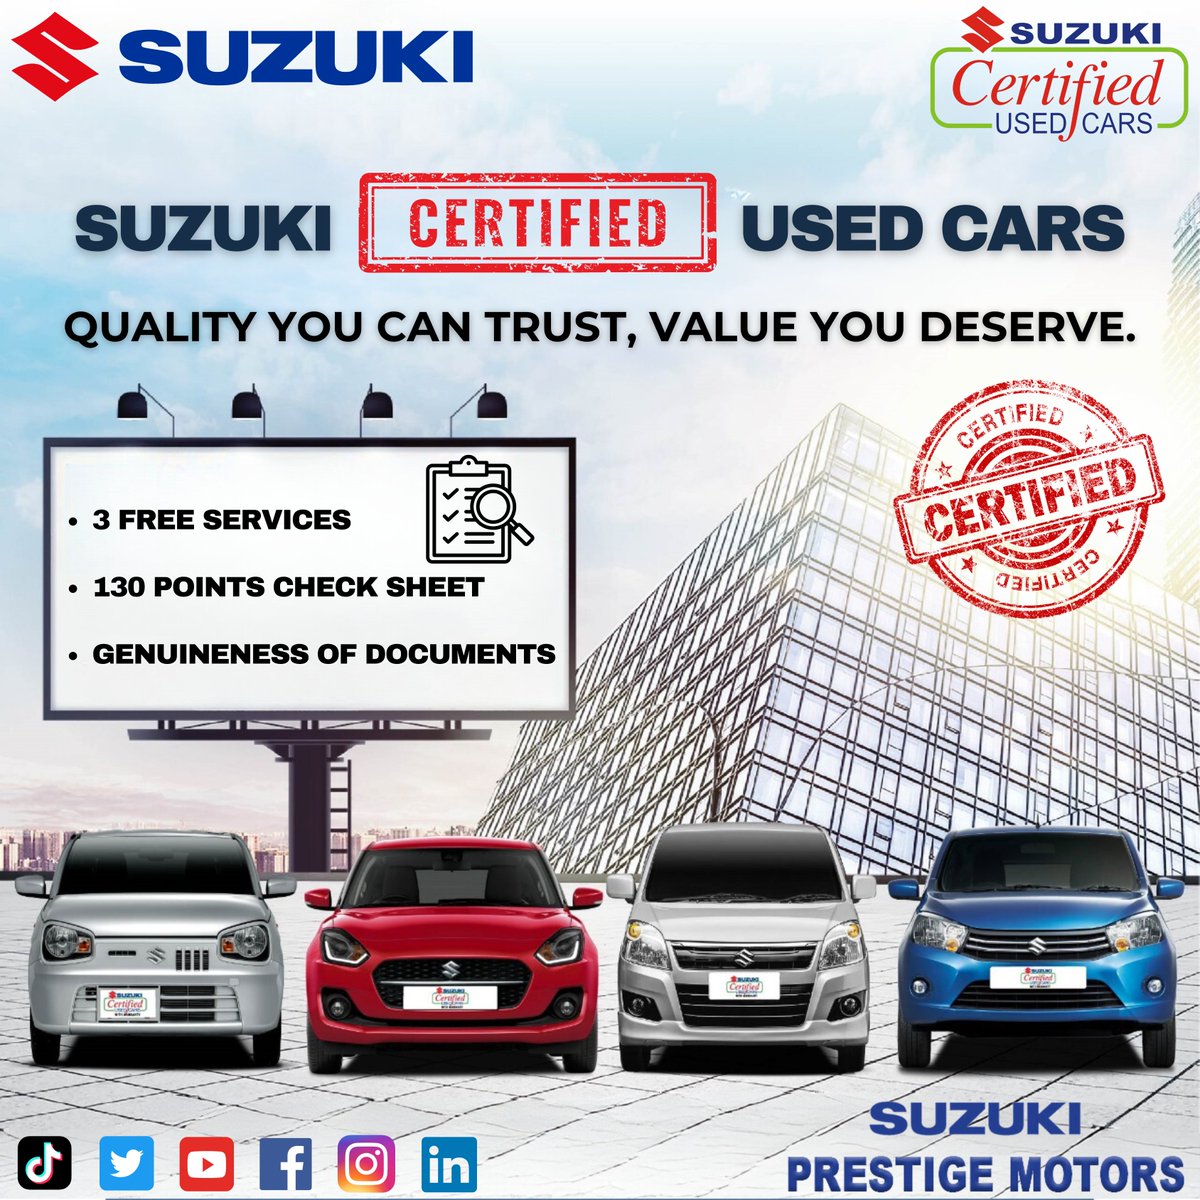 Experience Peace of Mind: Buy or Sell Certified Used Cars at Suzuki Prestige Motors!
#SuzukiPrestigeMotors #SuzukiPakistan #PakSuzuki #suzuki #suzukifamily #SuzukiCertifiedUsedCars #Certified #usedcarsforsale #likeforlikes #likesforlike #life #share #community #comment